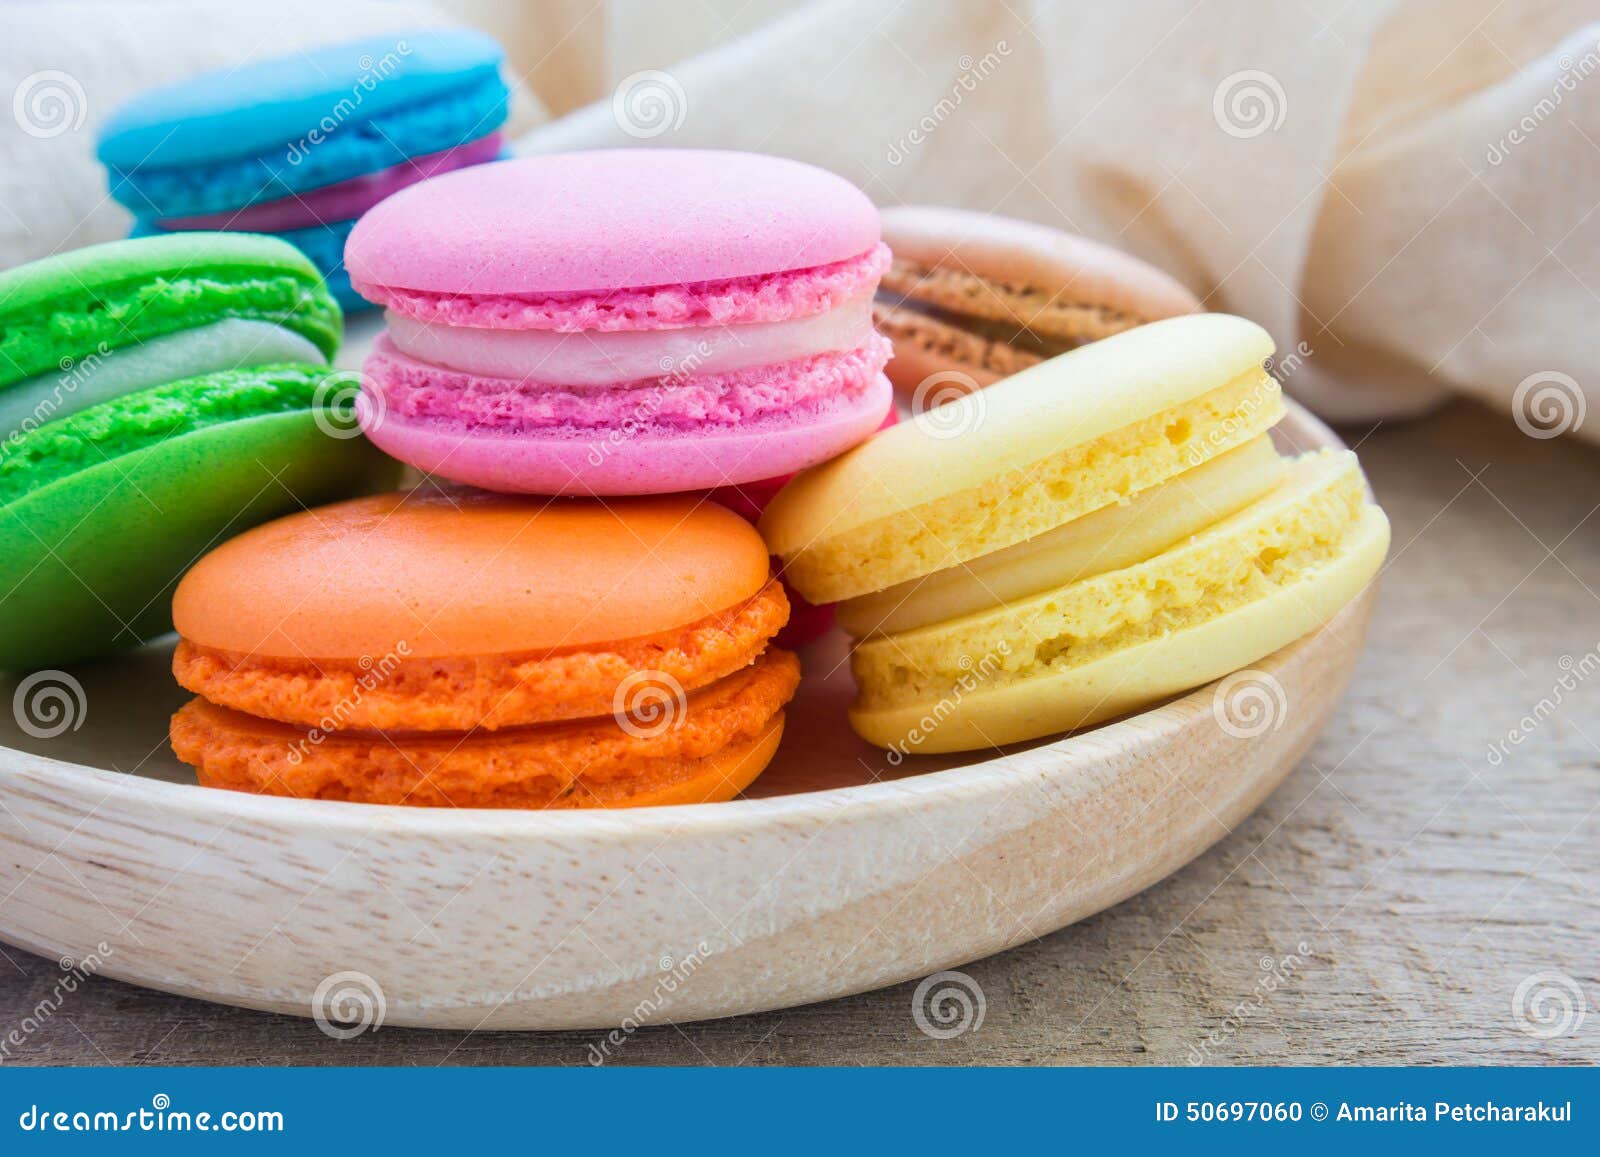 Colorful Macarons Stock Image | CartoonDealer.com #56523505